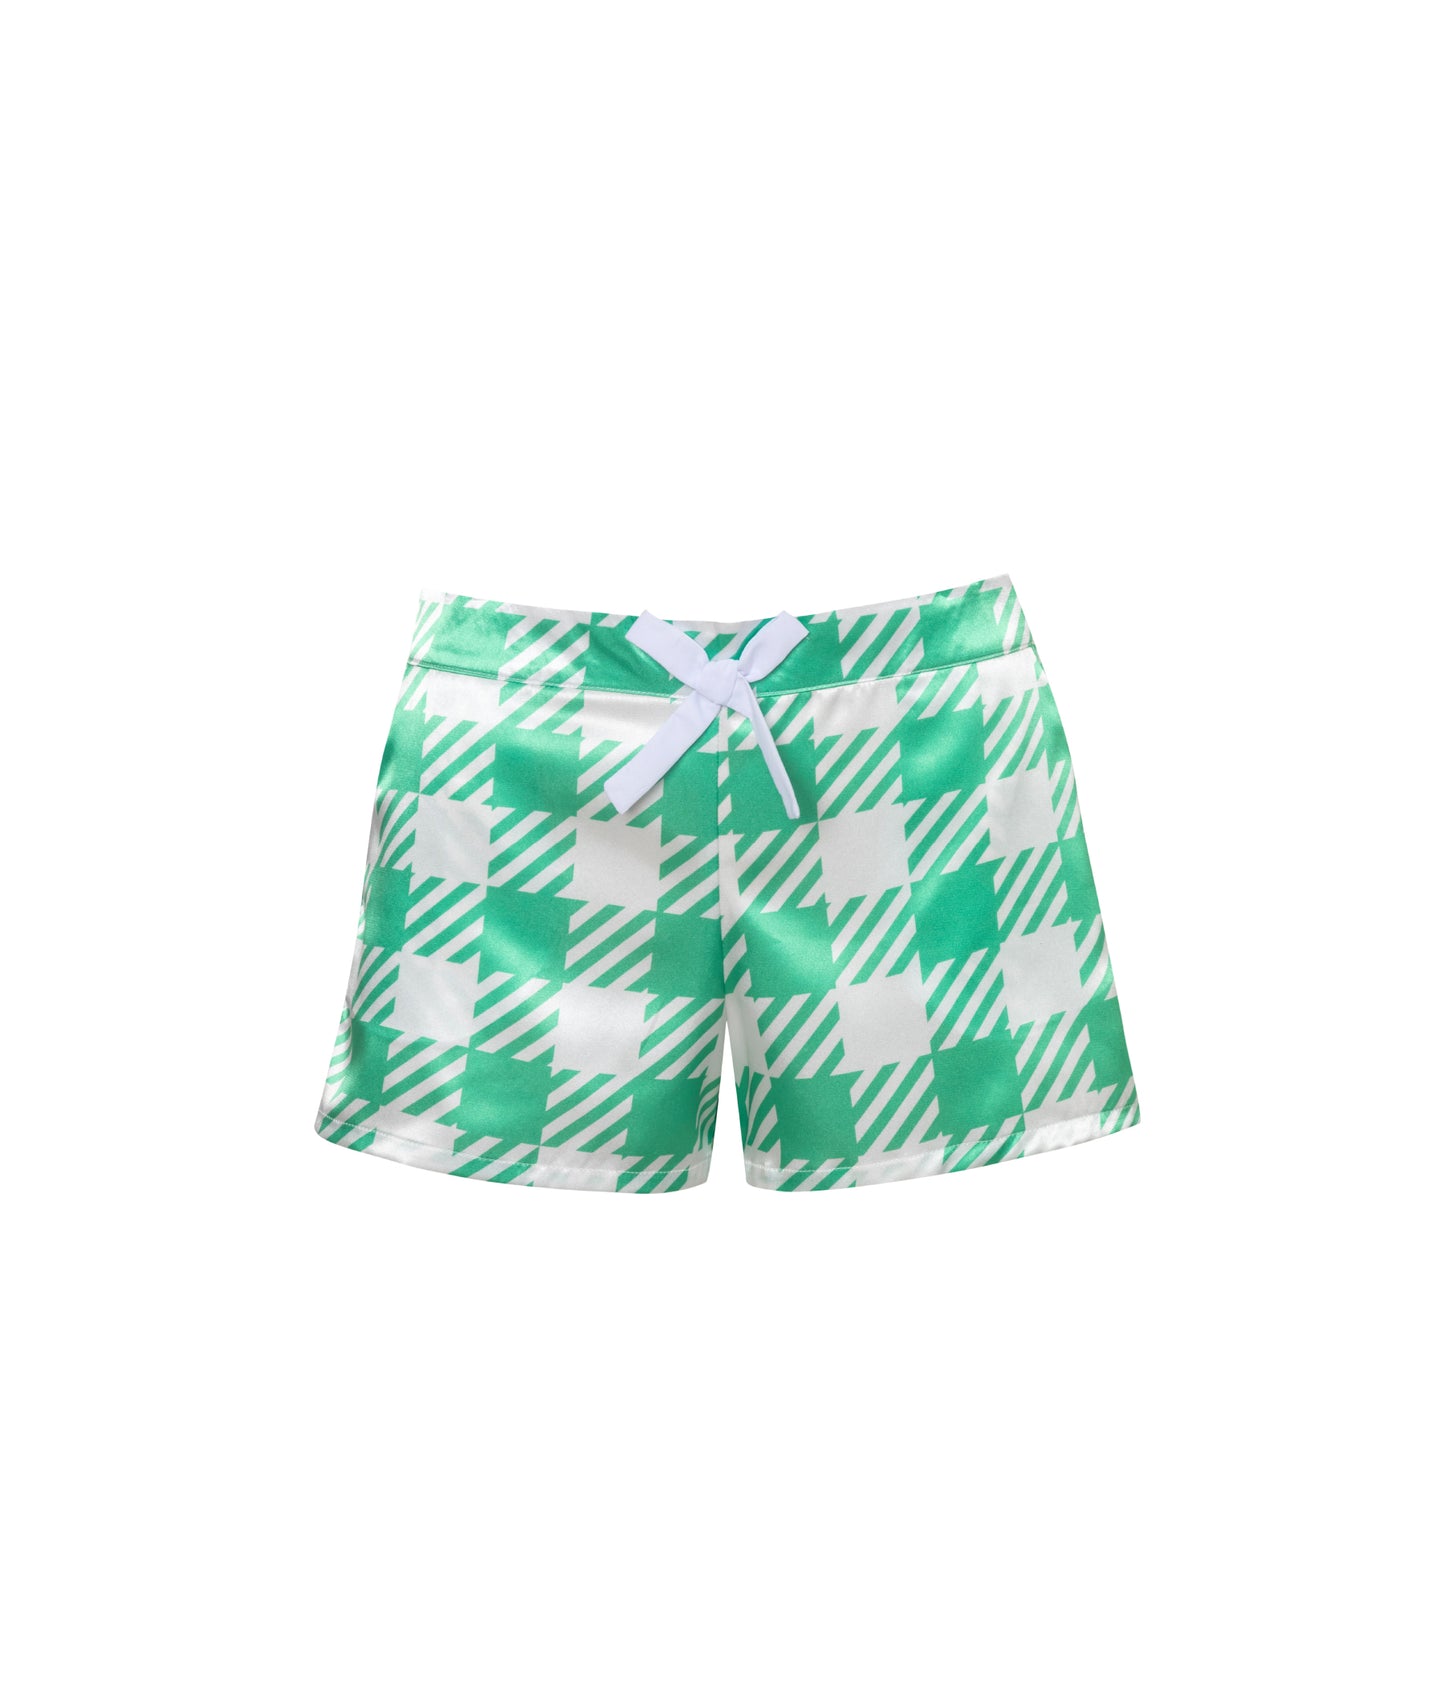 Verdelimon - Shorts - Santorini - Printed - Green Squares - Front